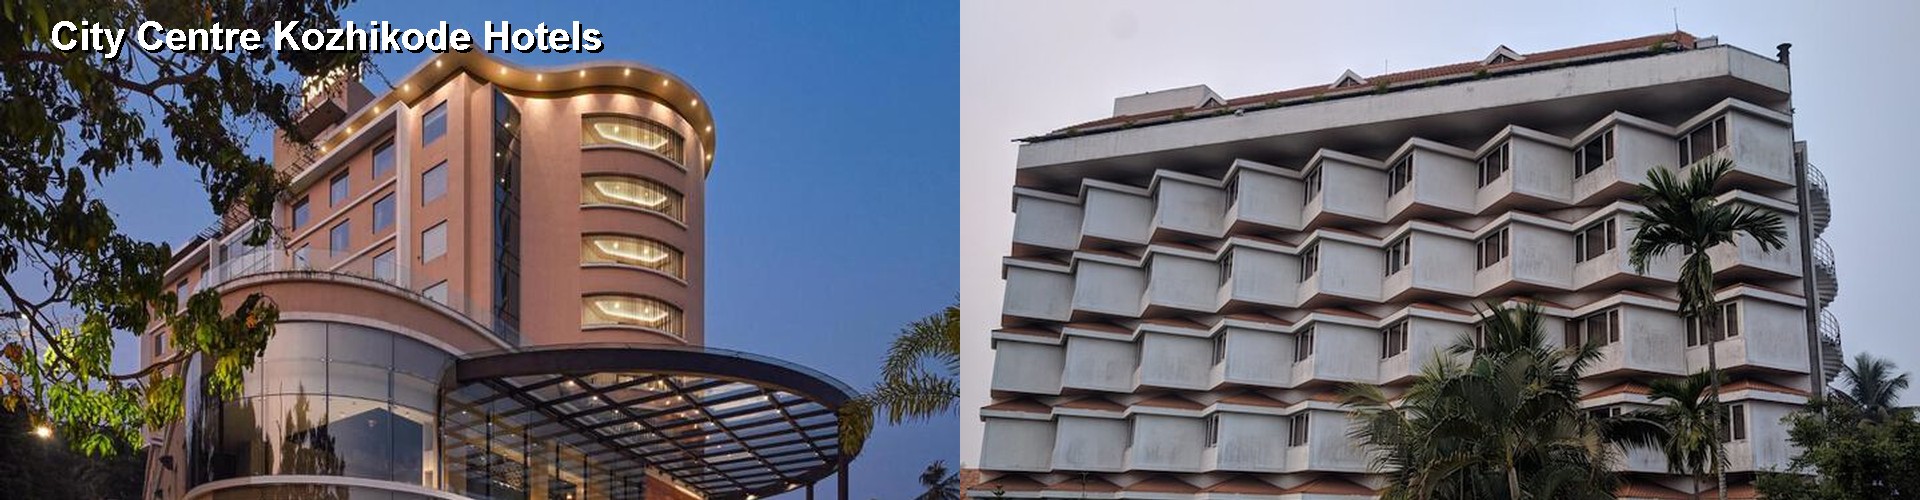 2 Best Hotels near City Centre Kozhikode